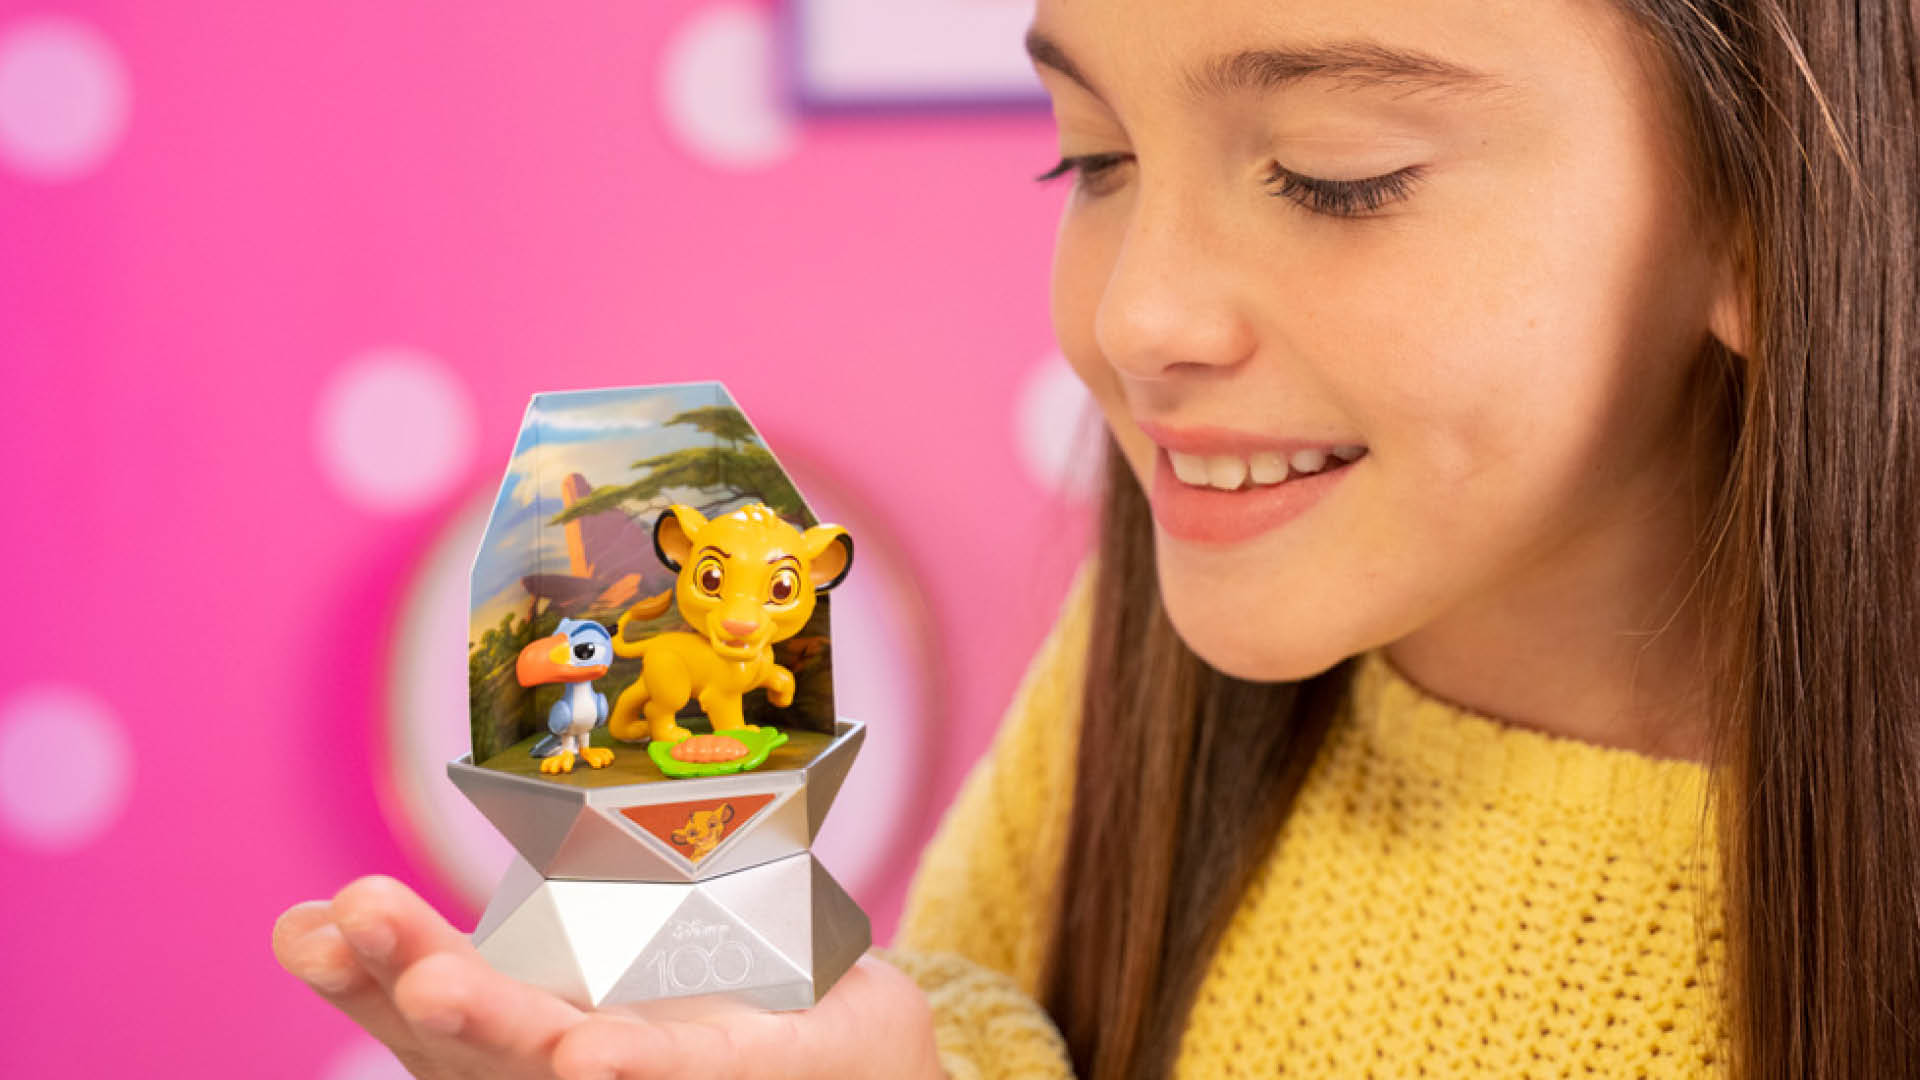 YuMe Toys Celebrates Disney's 100th Anniversary with Surprise